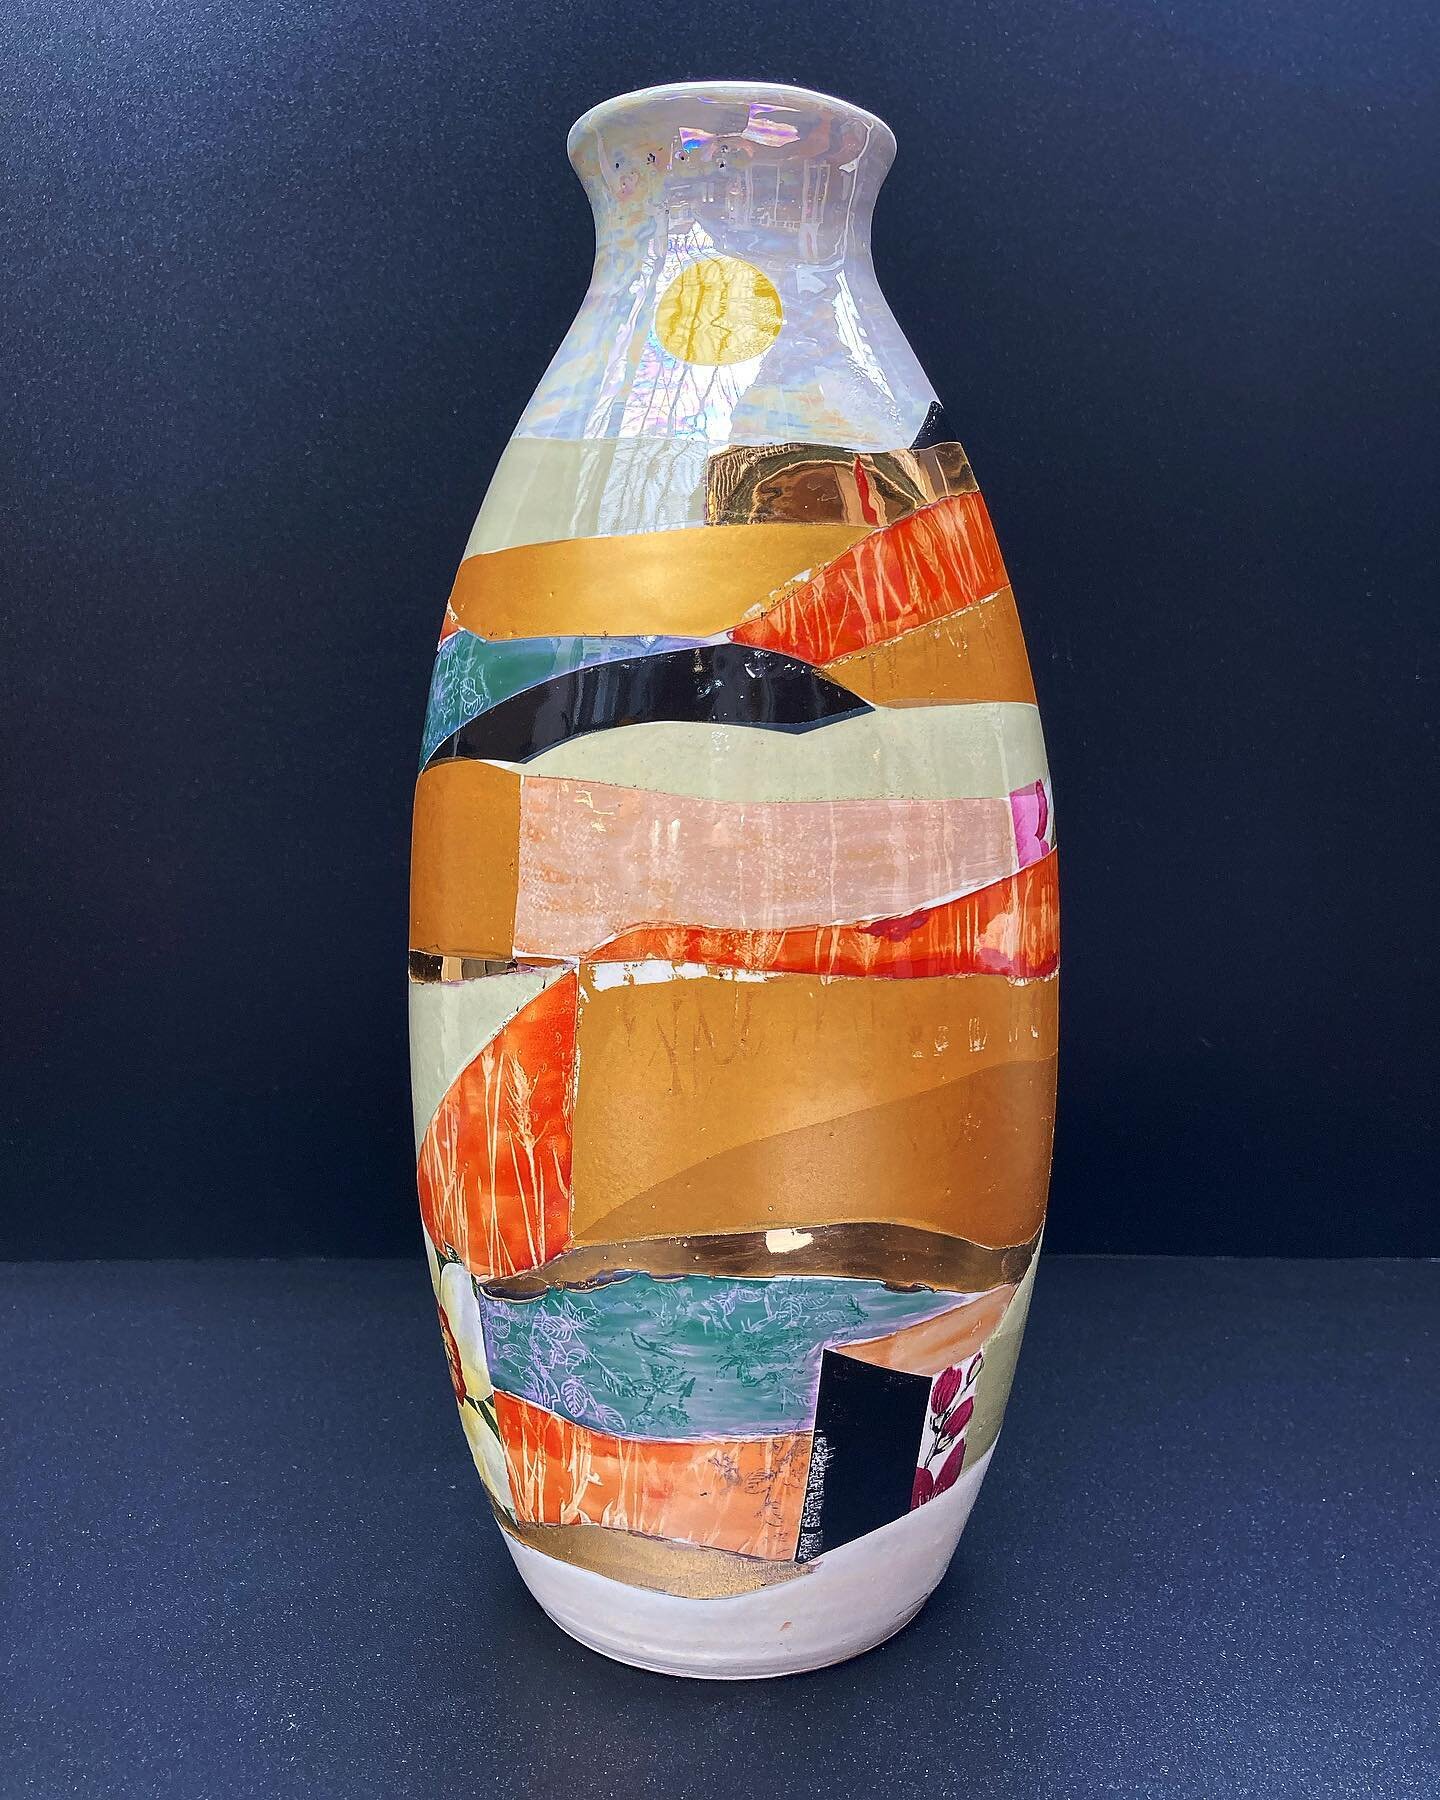 #coiling #vase #new #shape #bowl #landscape #design #craft #art #lustre #bird #trinket #vessel #clay #available @manchestercraft #manchester #northernquarter #makersatmanchestercraft #clayart #wheretobuyceramics